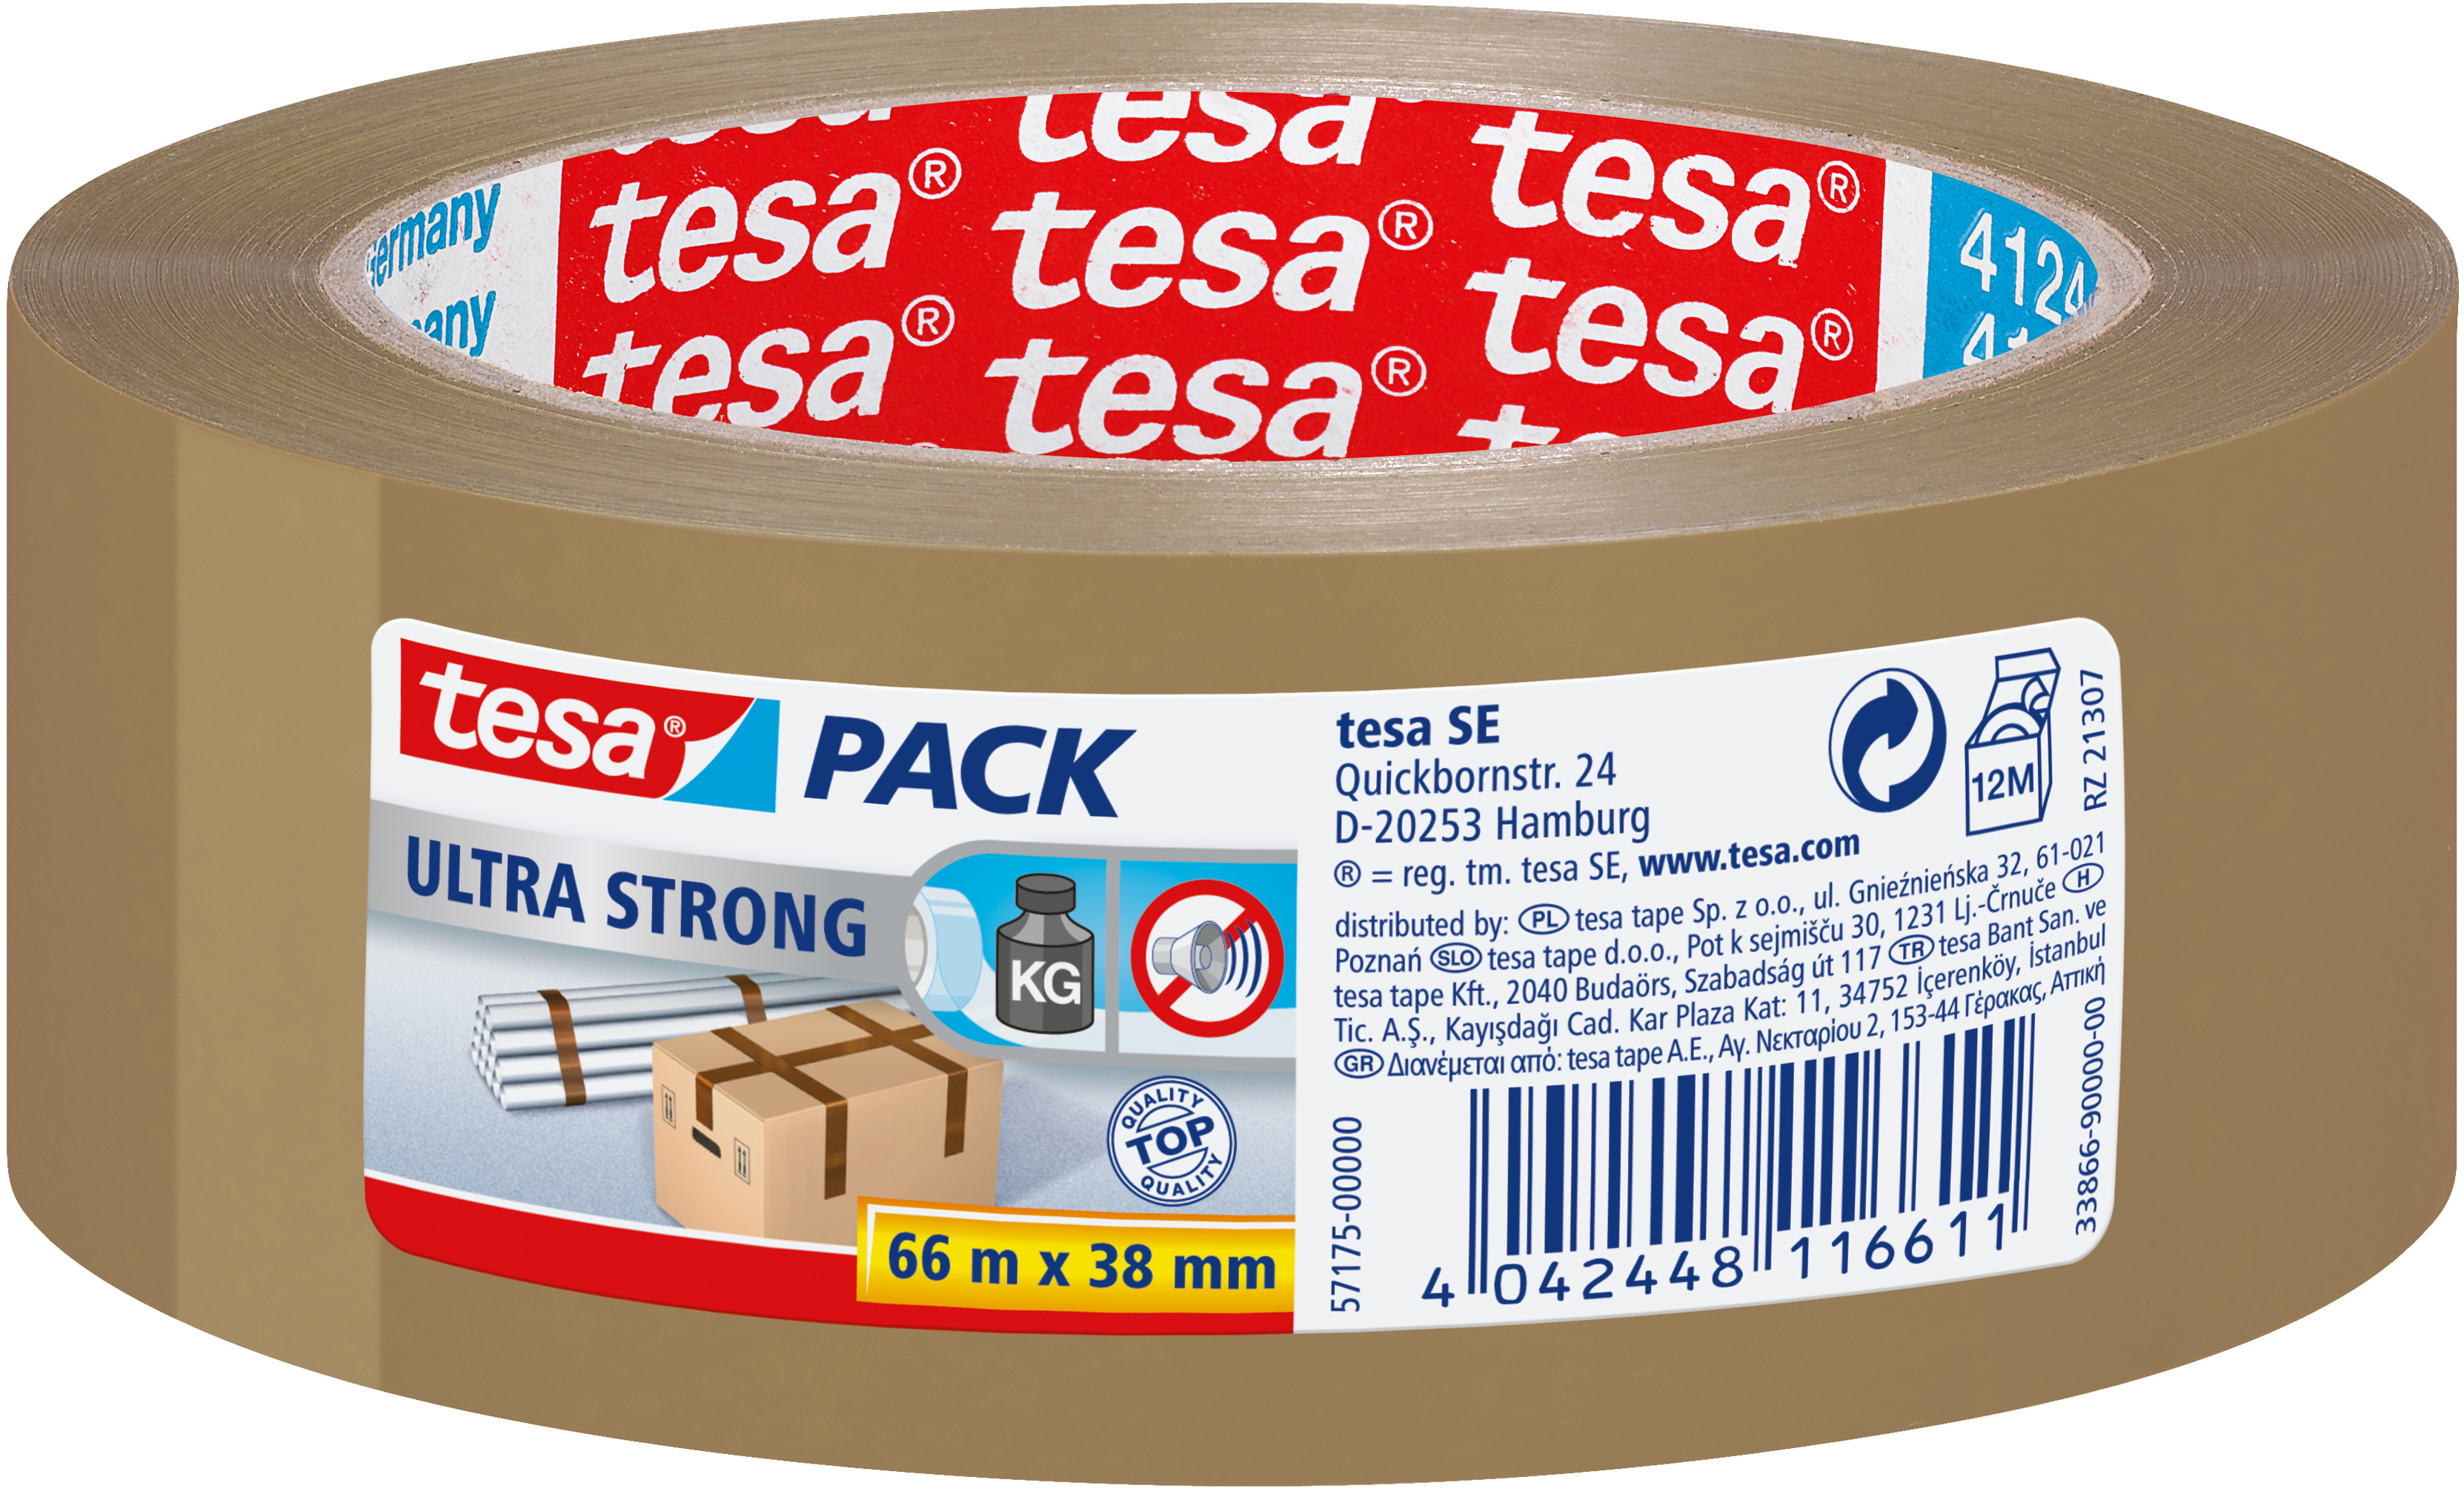 TESA Tesapack ultra strong 38mmx66m 571750000 brun, antidéchirure